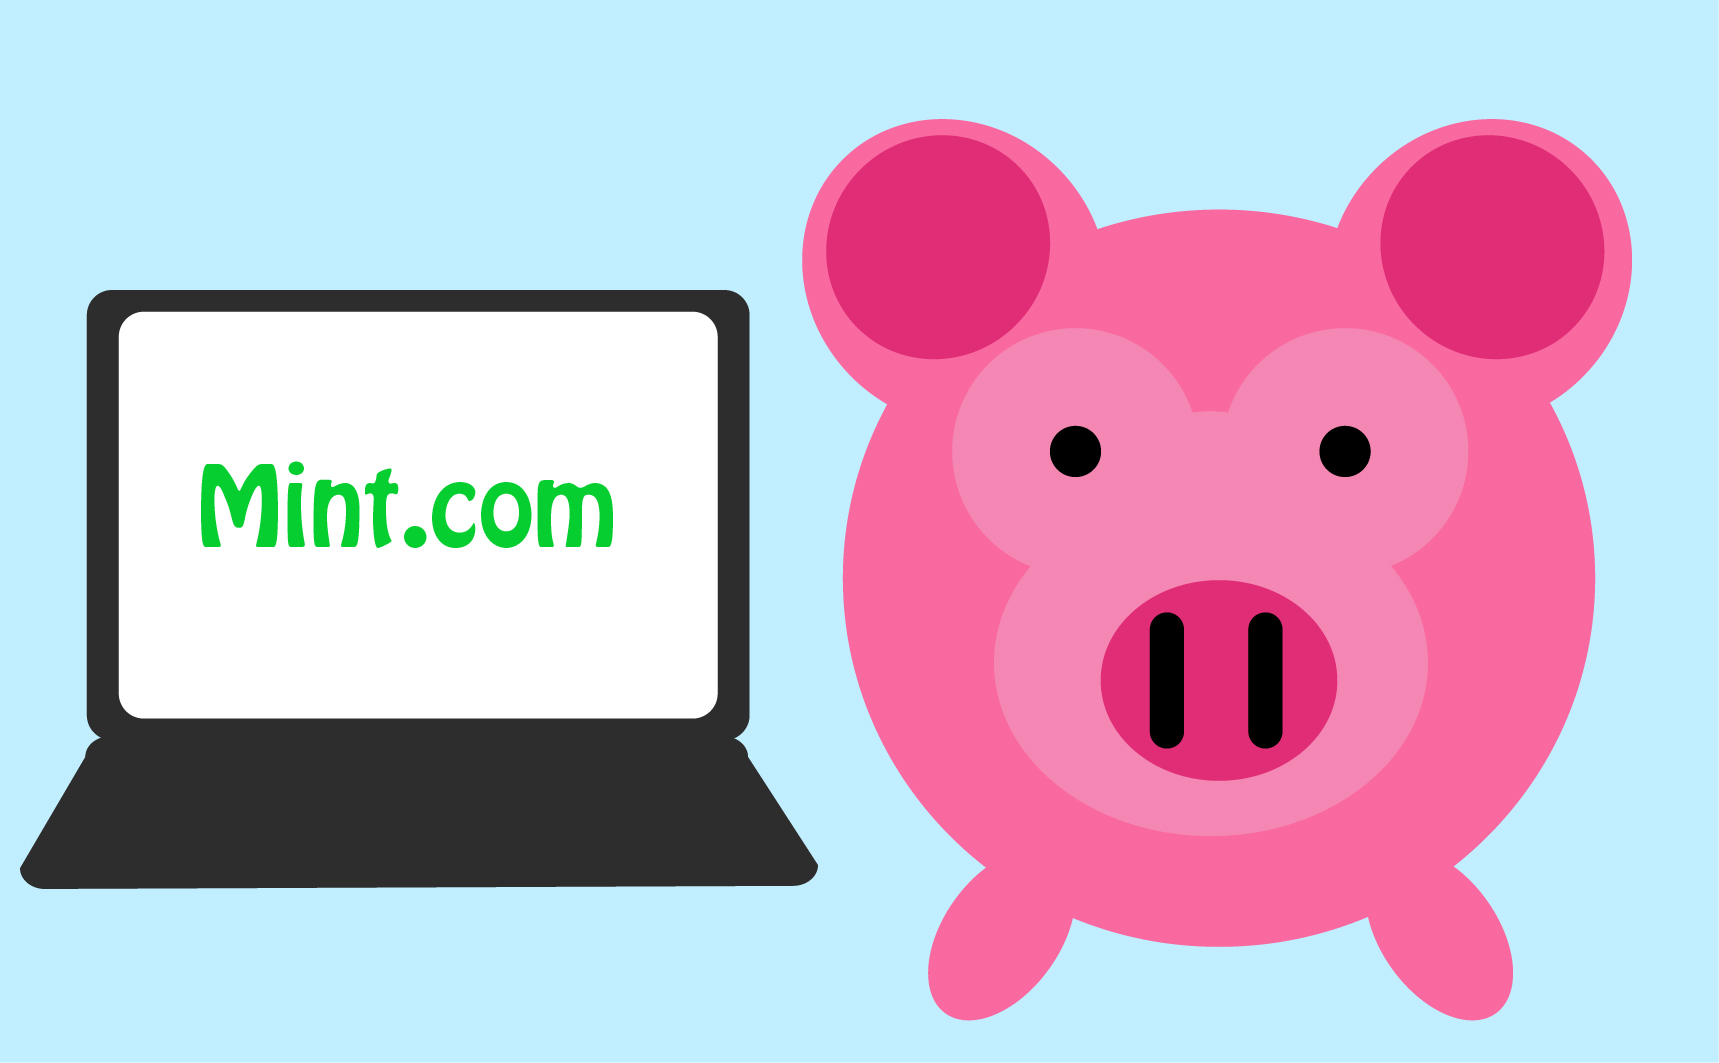 A piggy bank beside a laptop that says "Mint.com".